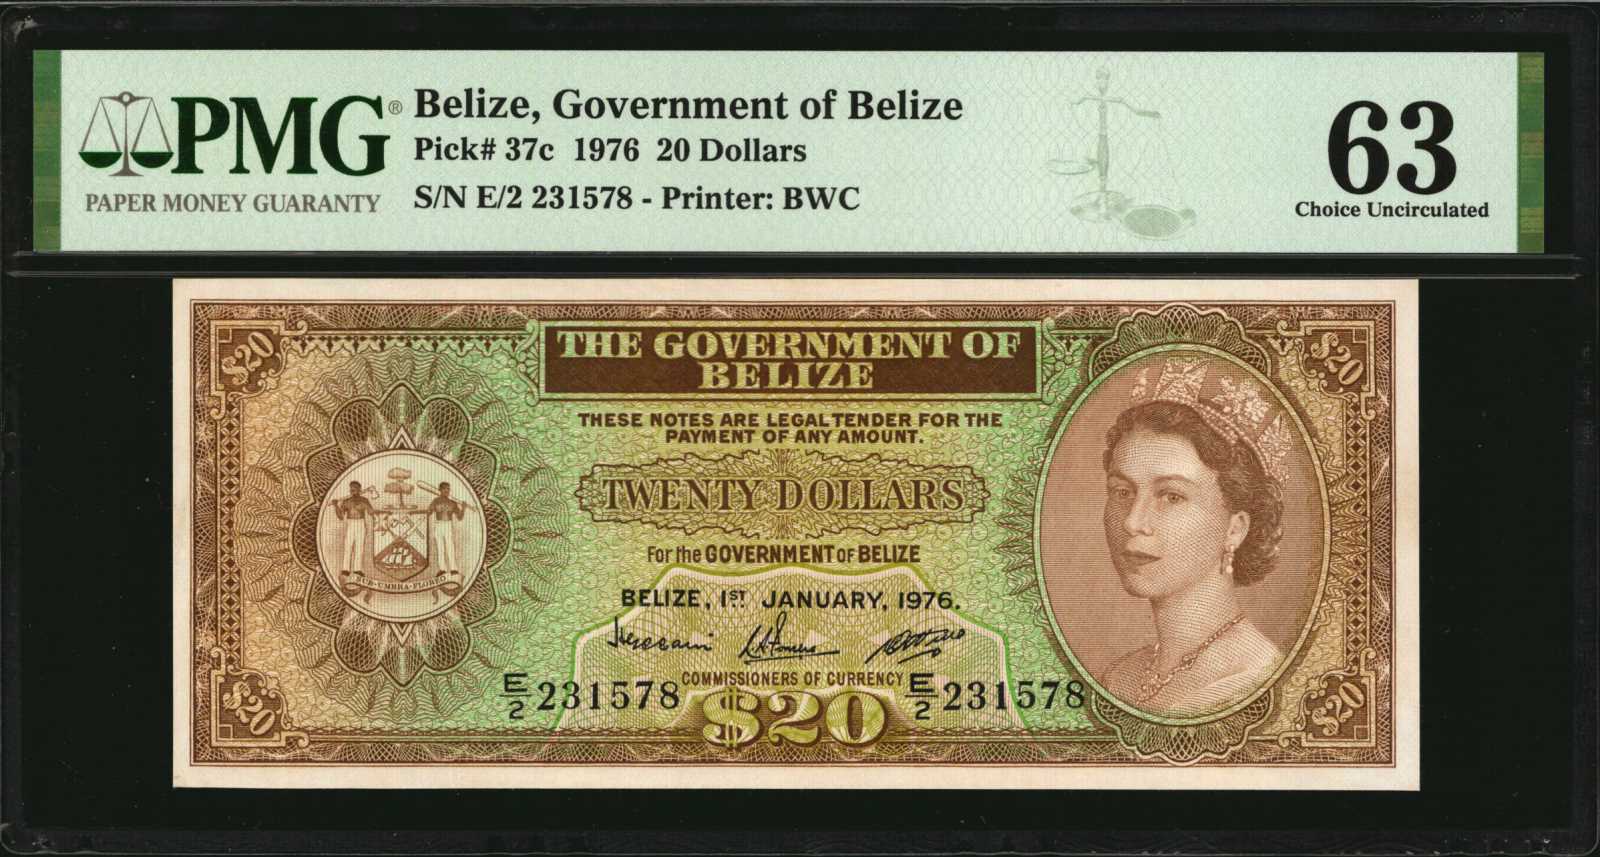 BELIZE. Government of Belize. 20 Dollars